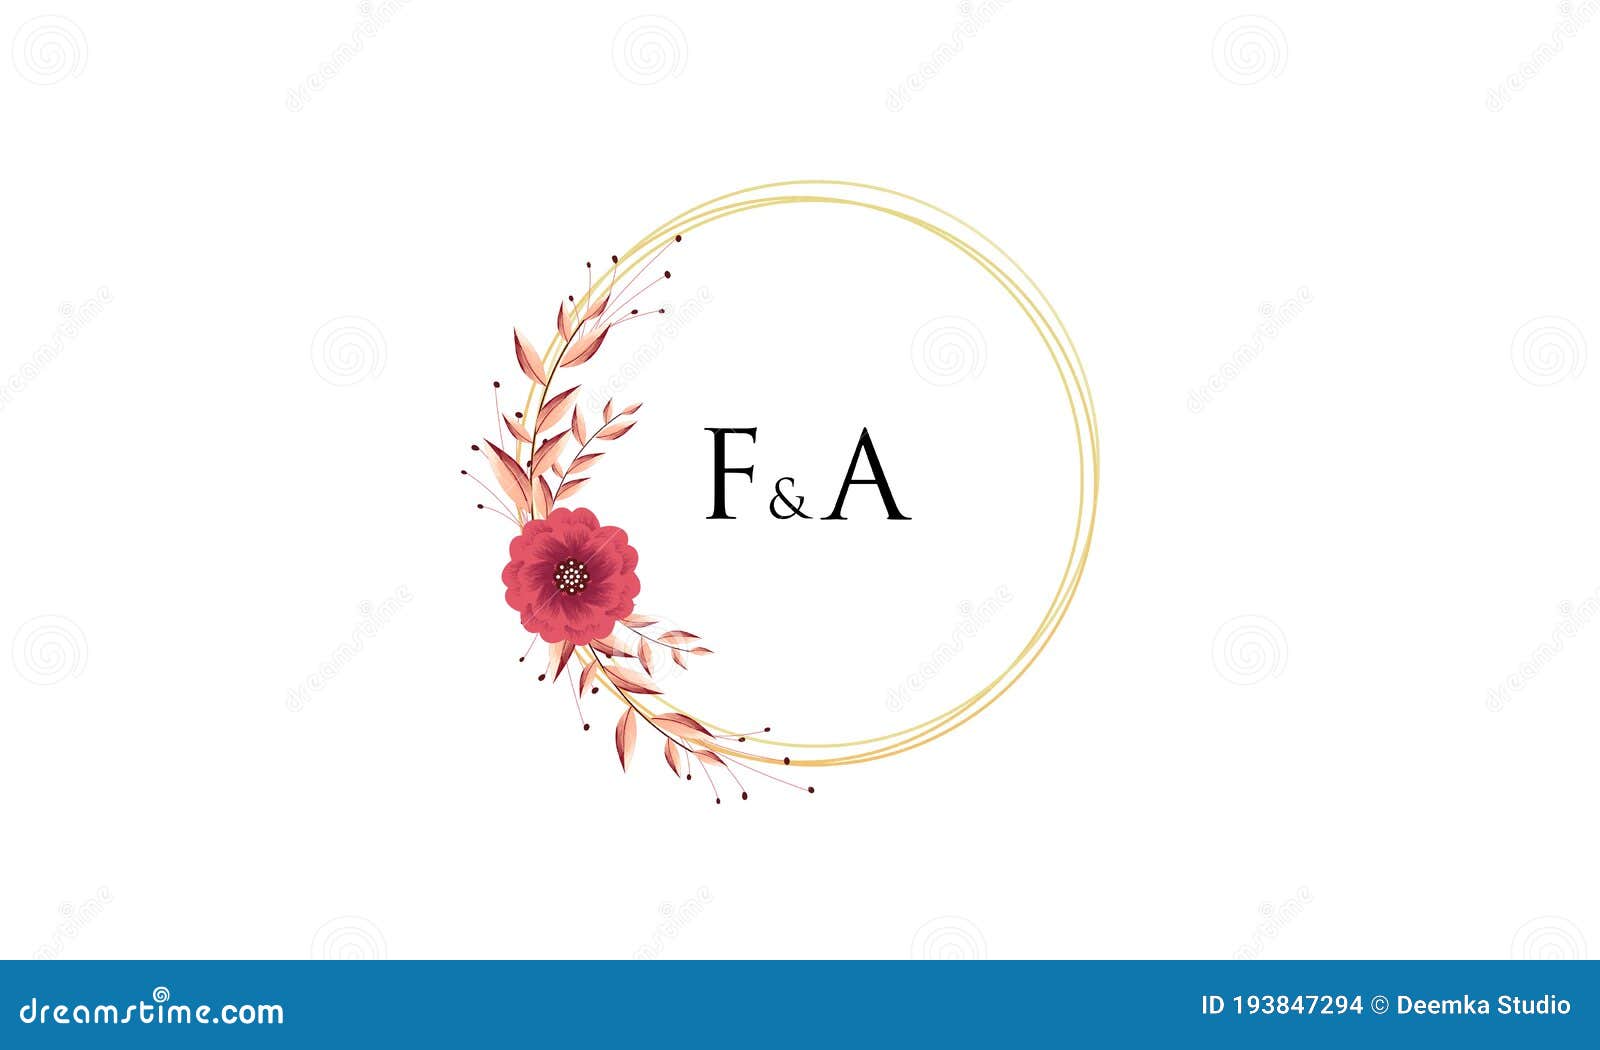 Watercolor Floral Wedding Monogram Logo Graphic by